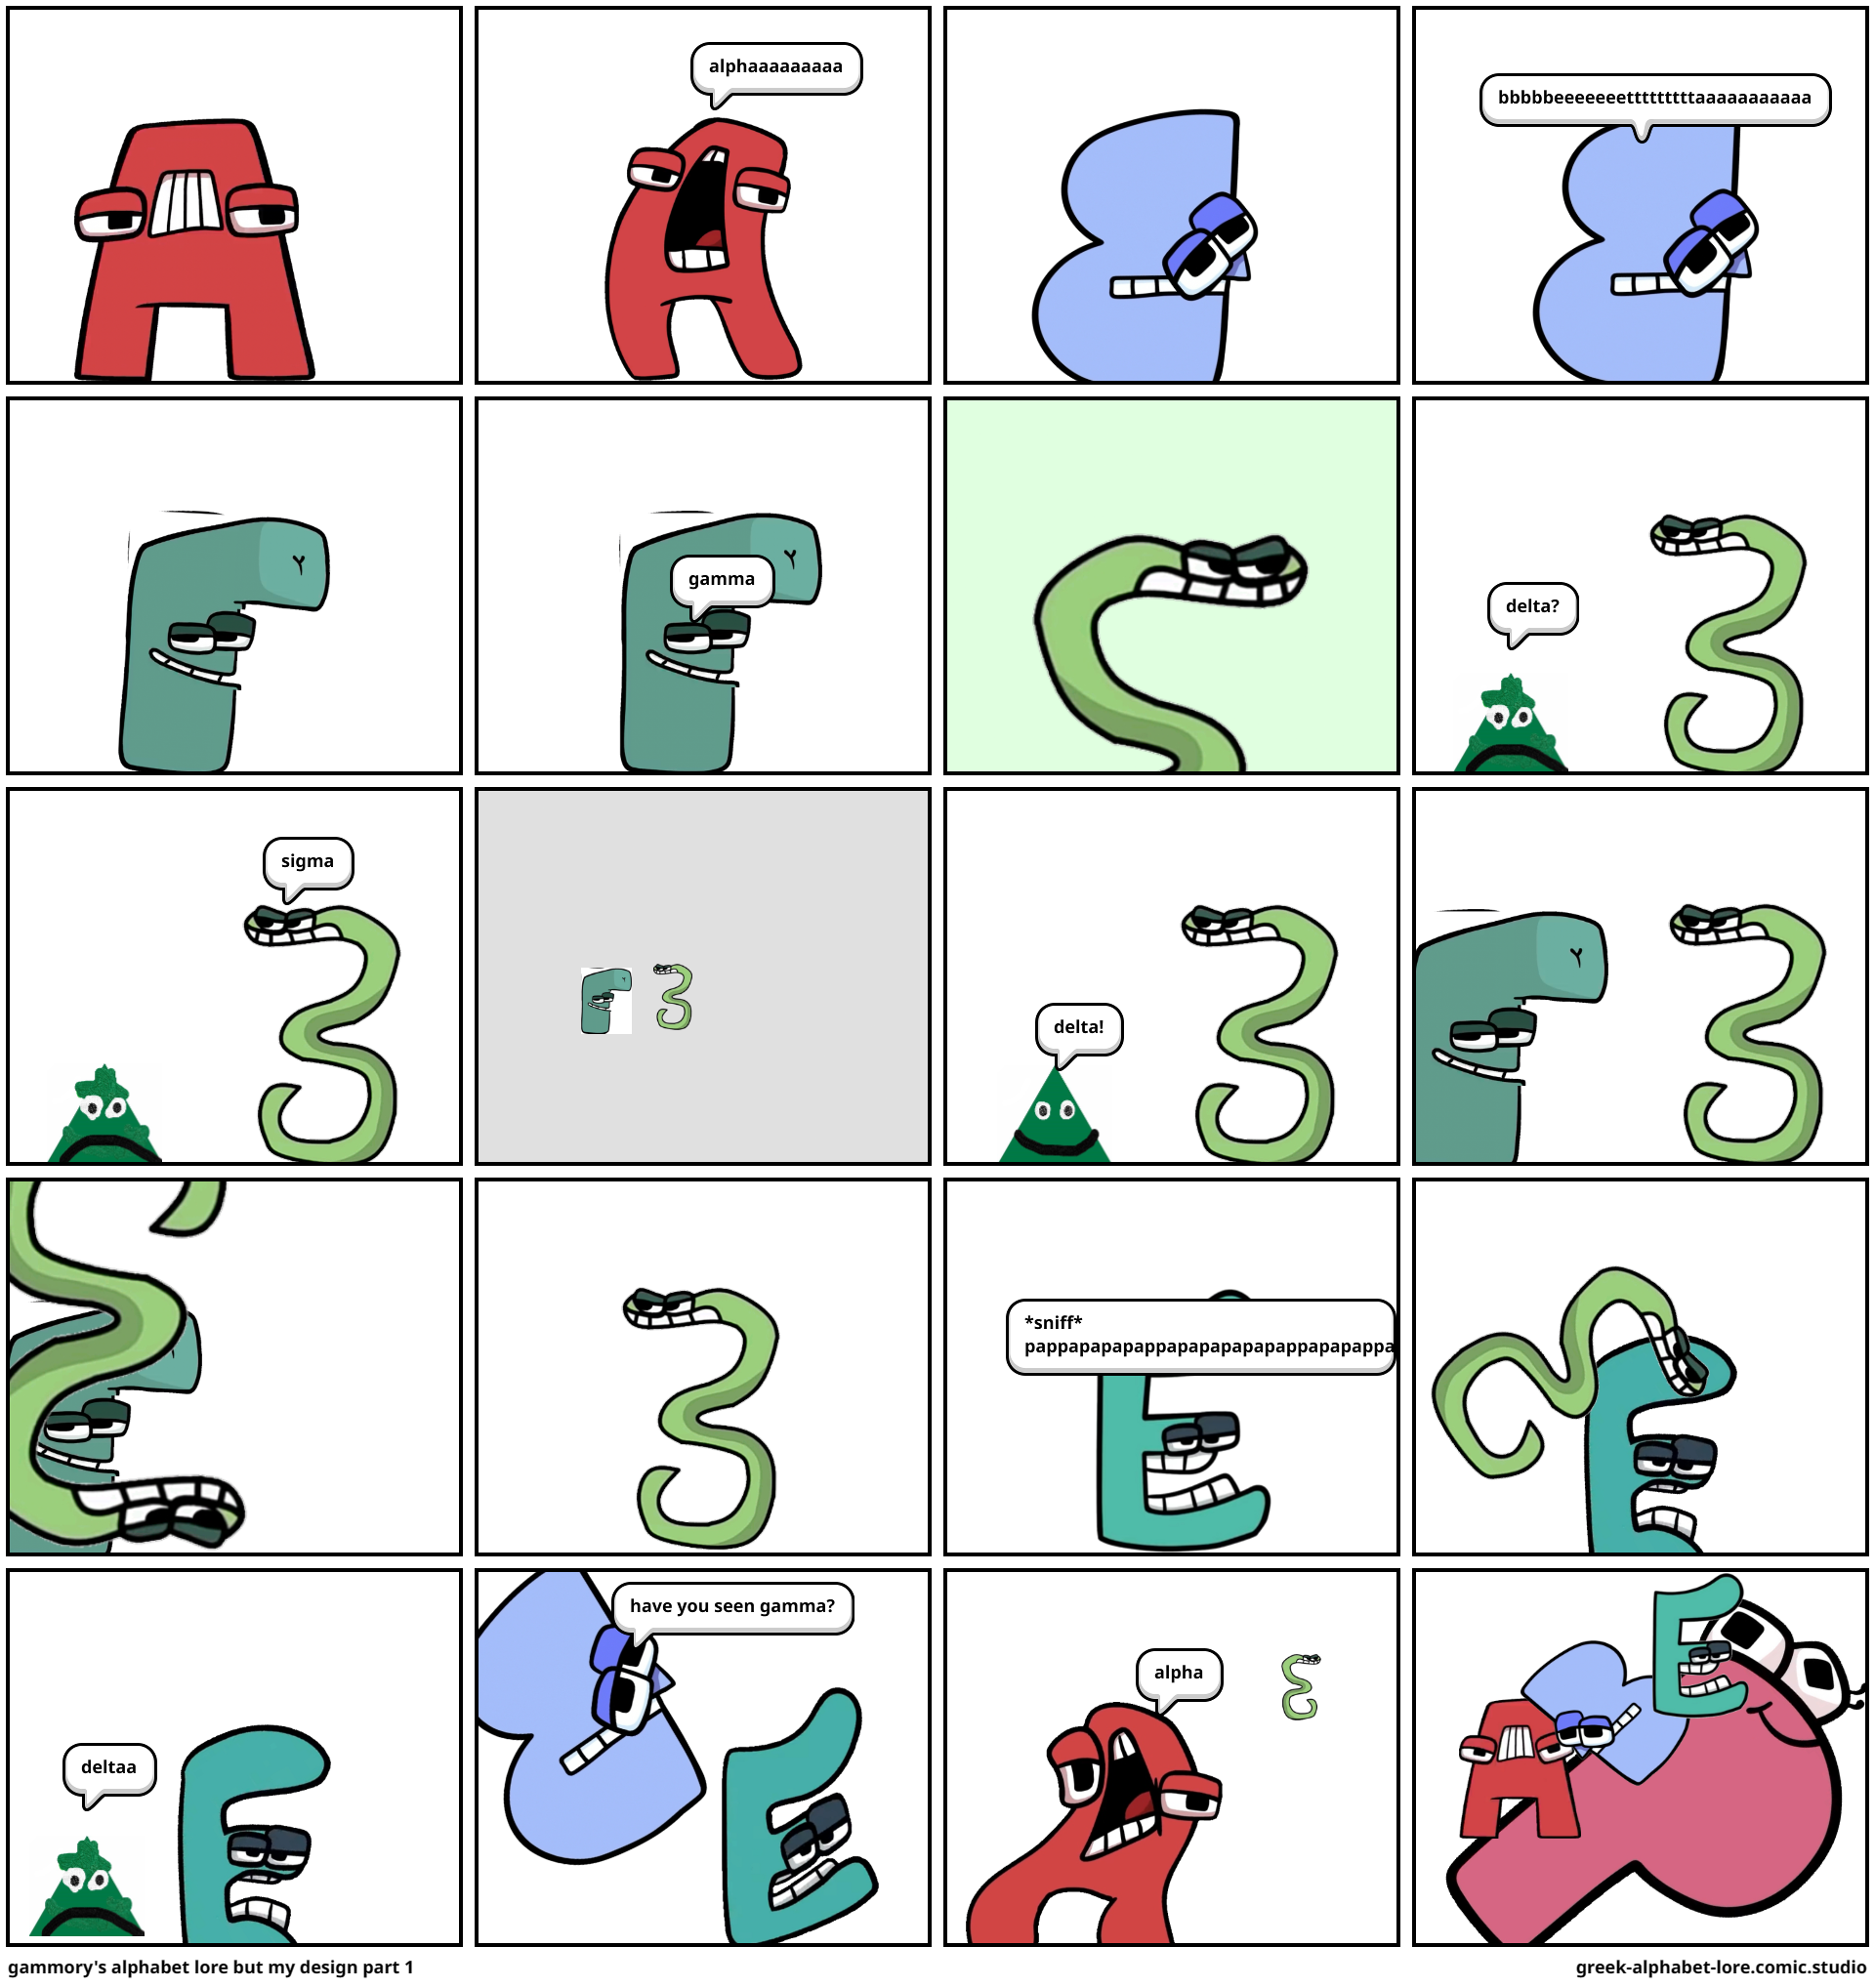 gammory's alphabet lore but my design part 1